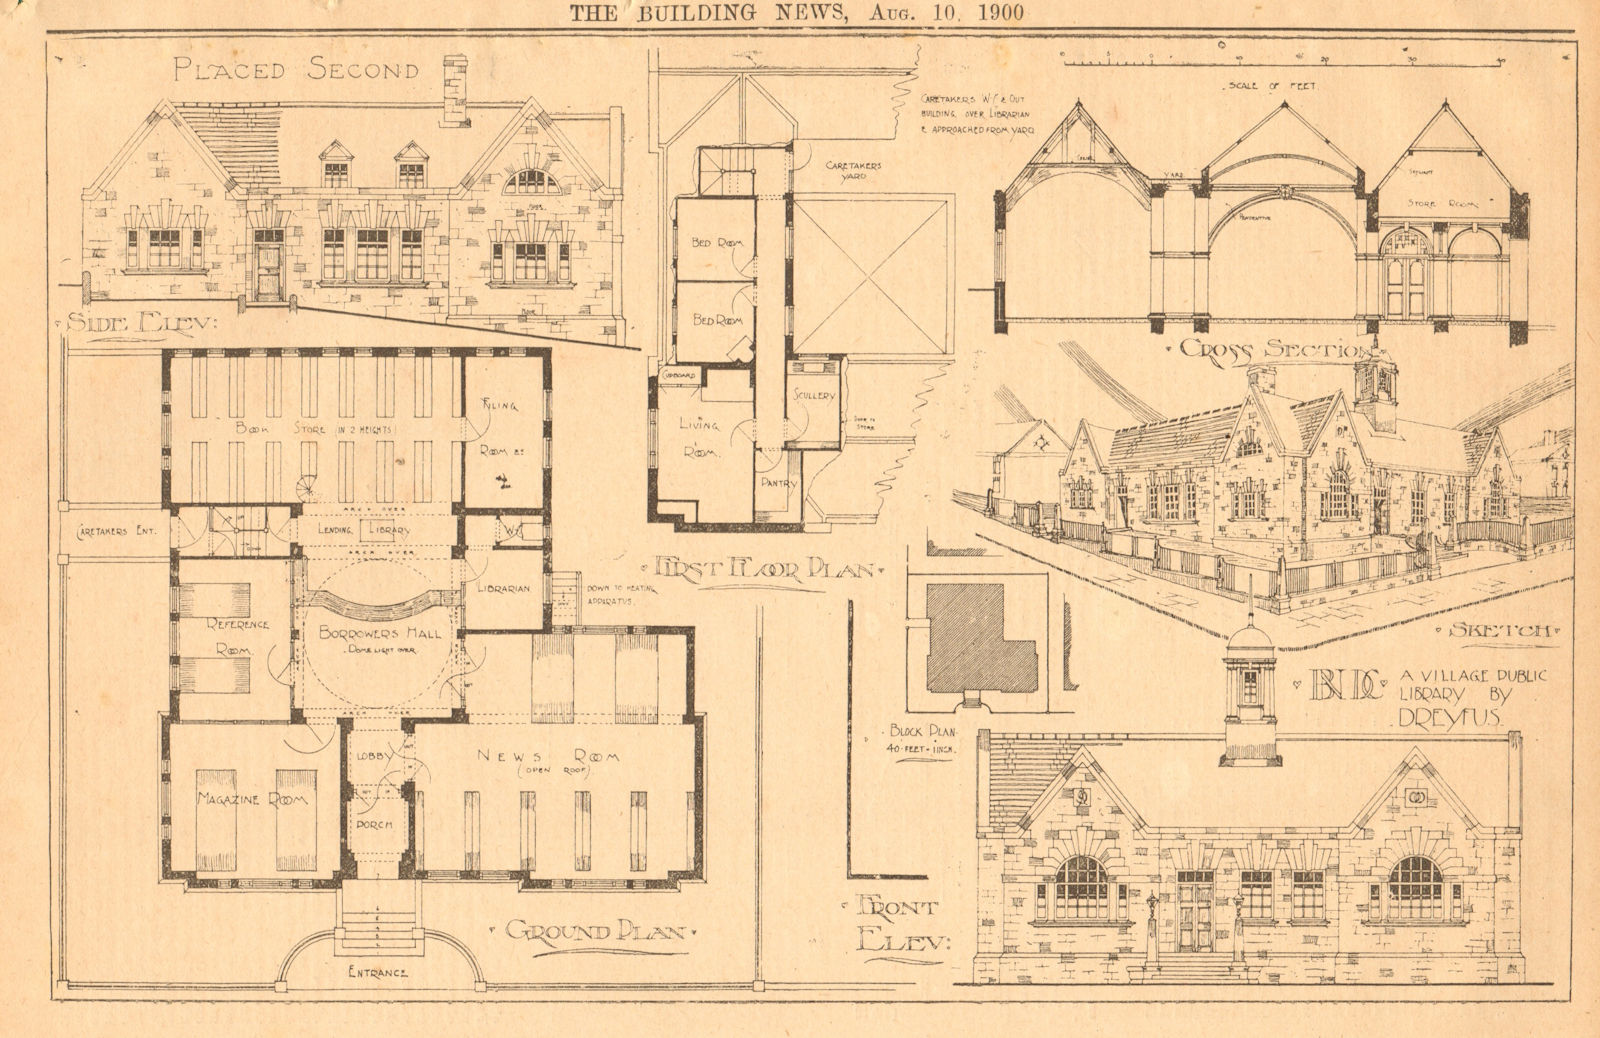 A village Public Library by Dreyfus. Ground floor, 1st floor plan 1900 print